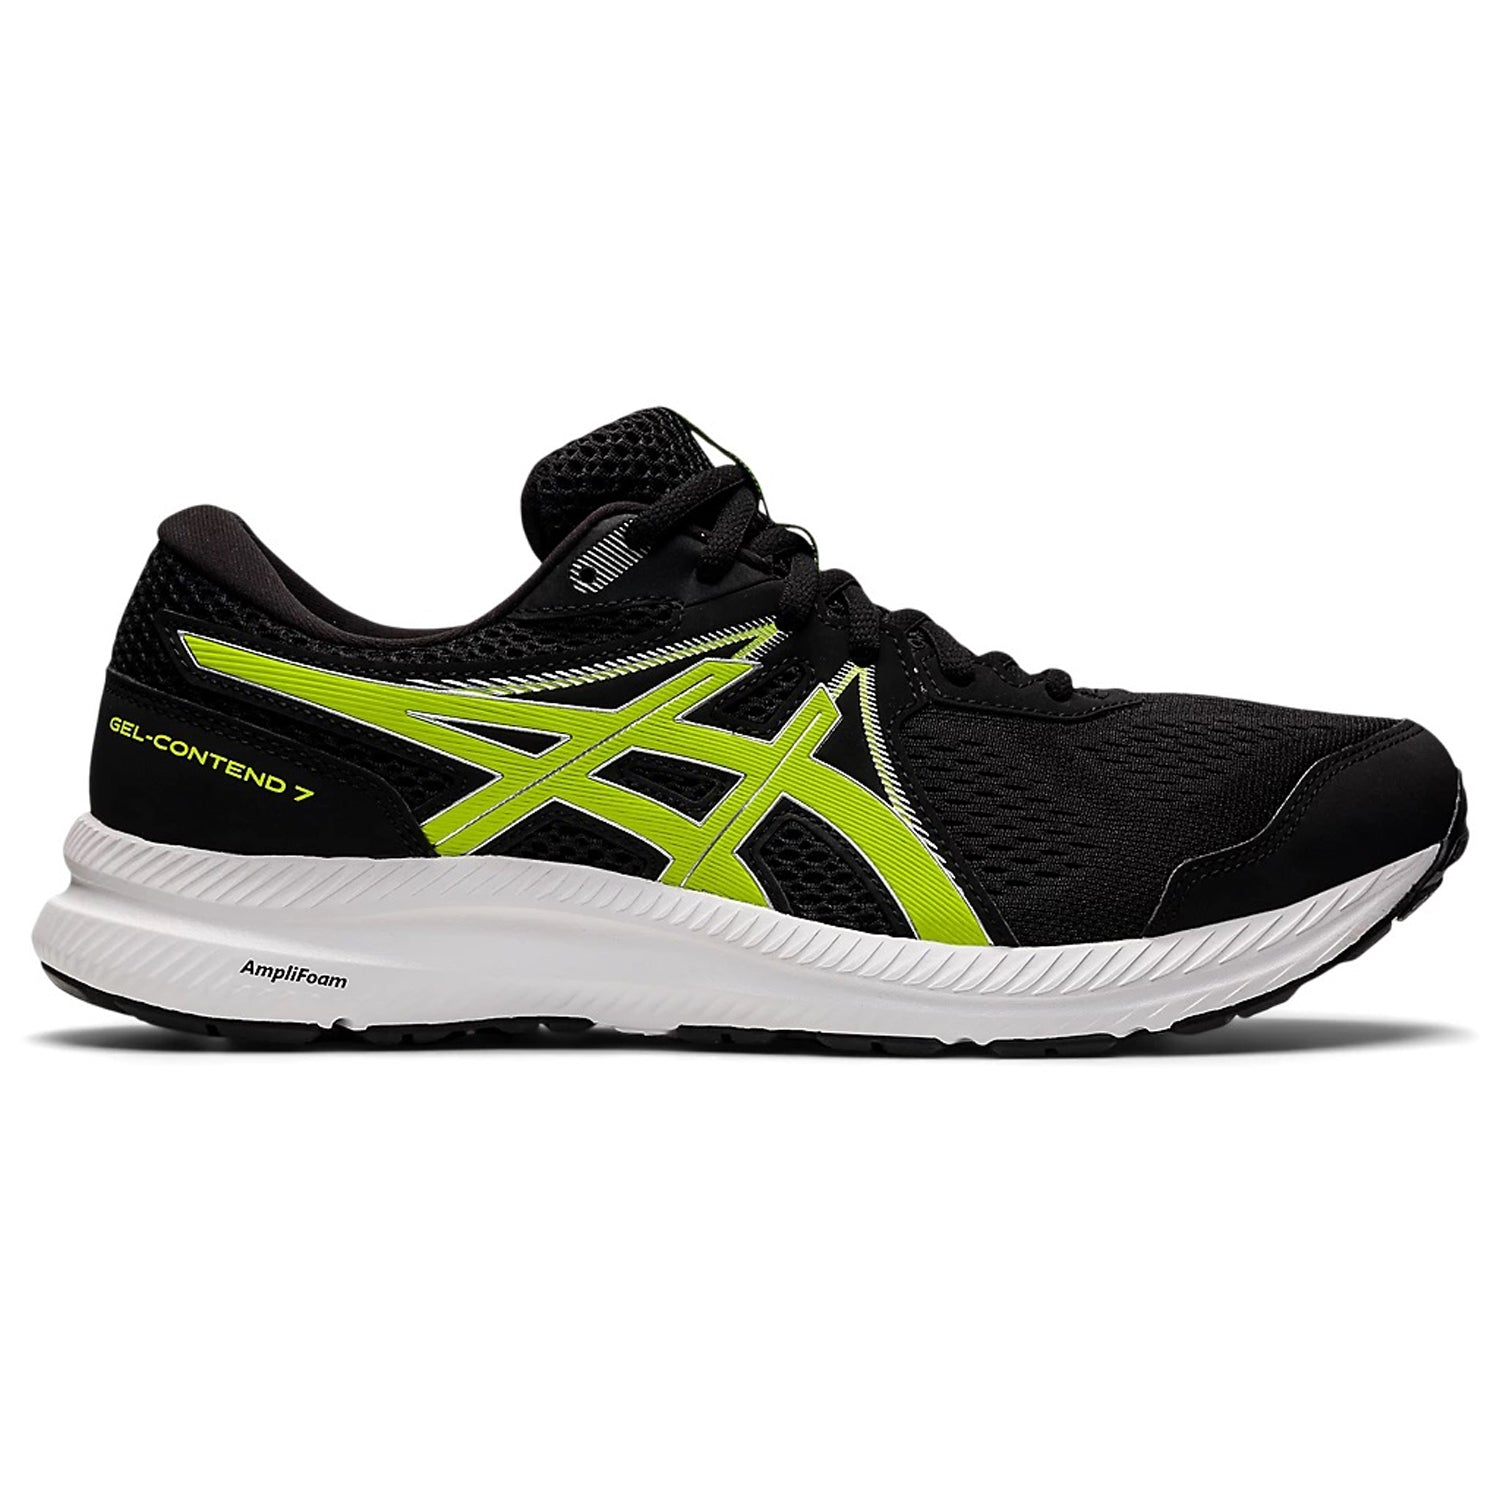 Asics GEL-CONTEND 7 Men's Running Shoes, Black/Pure Silver - Best Price online Prokicksports.com